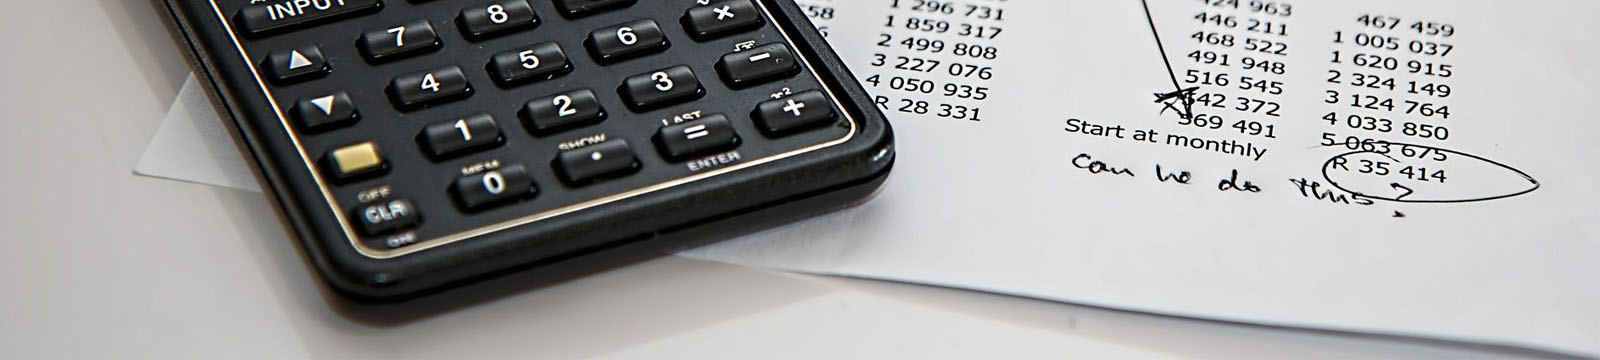 photo of calculator and invoice